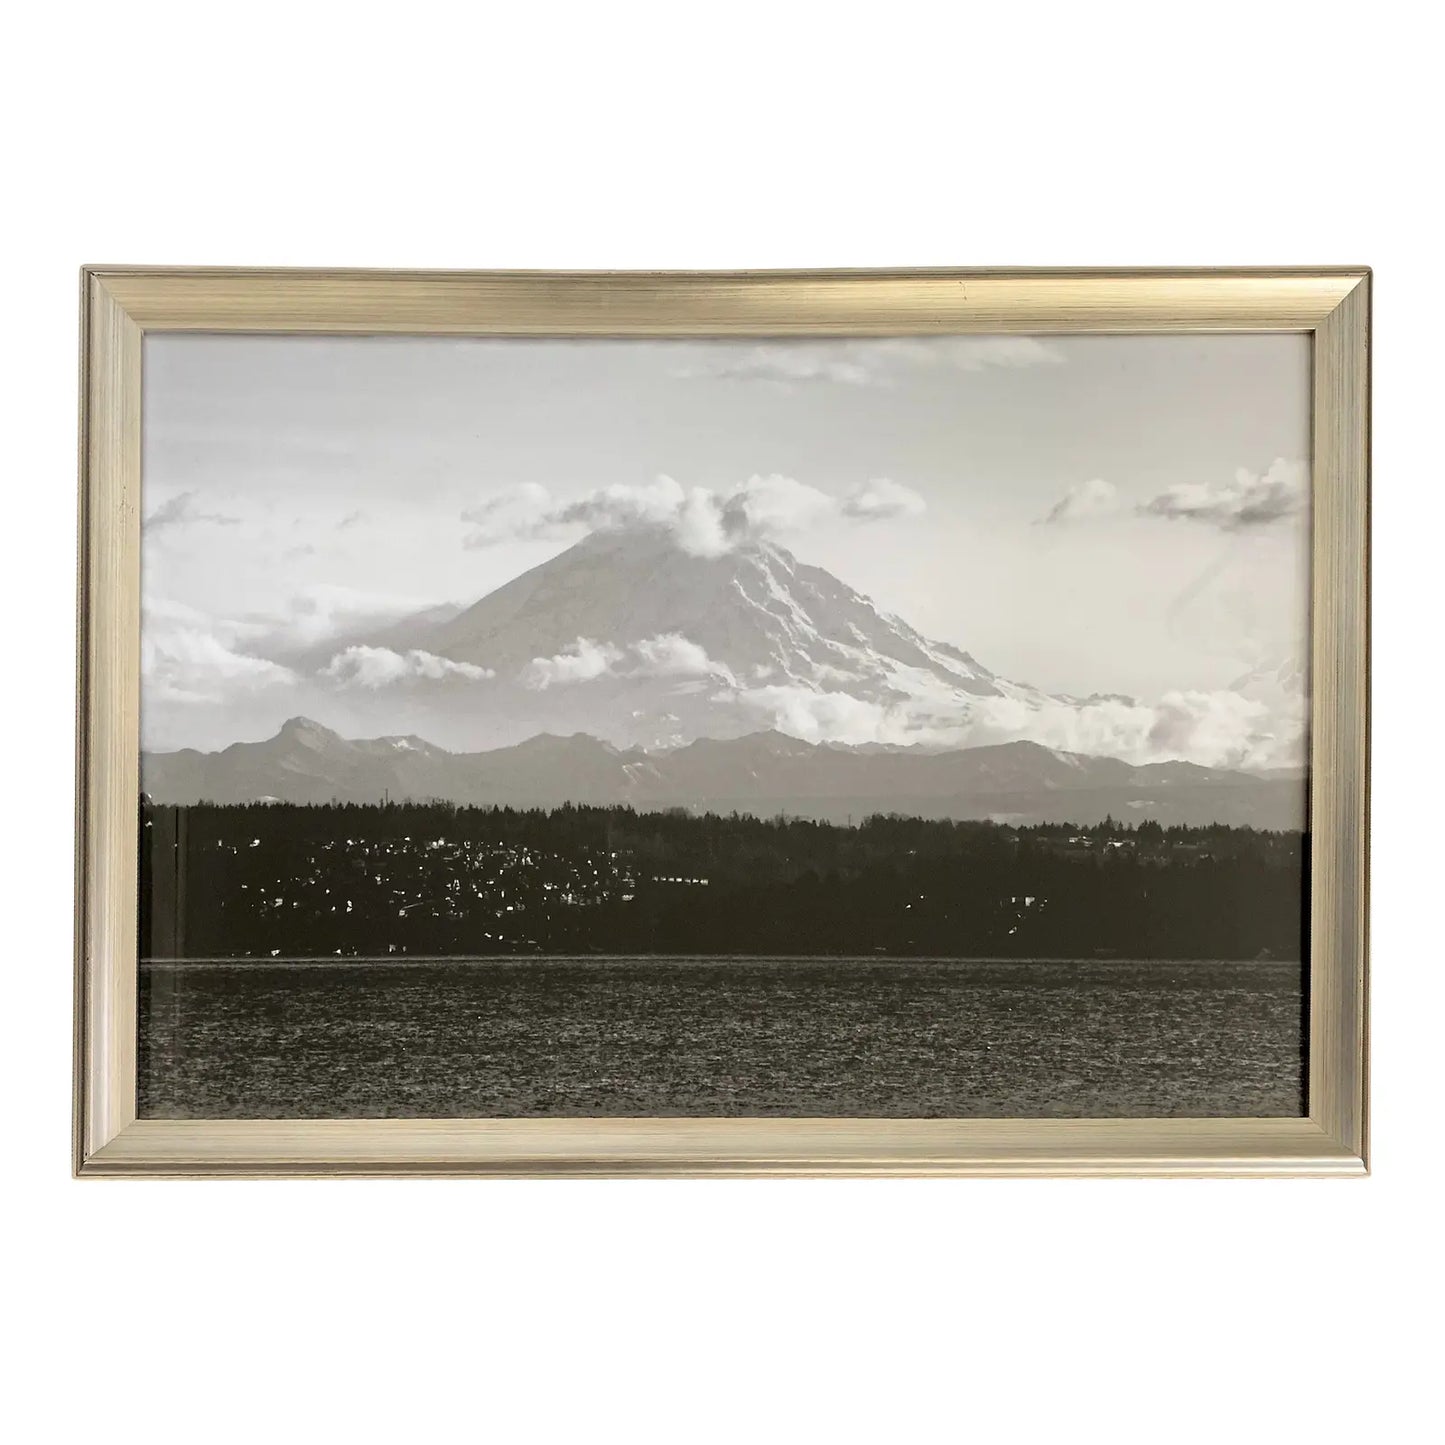 "Mt. Rainier" Mountain Landscape Black and White Photograph, Framed